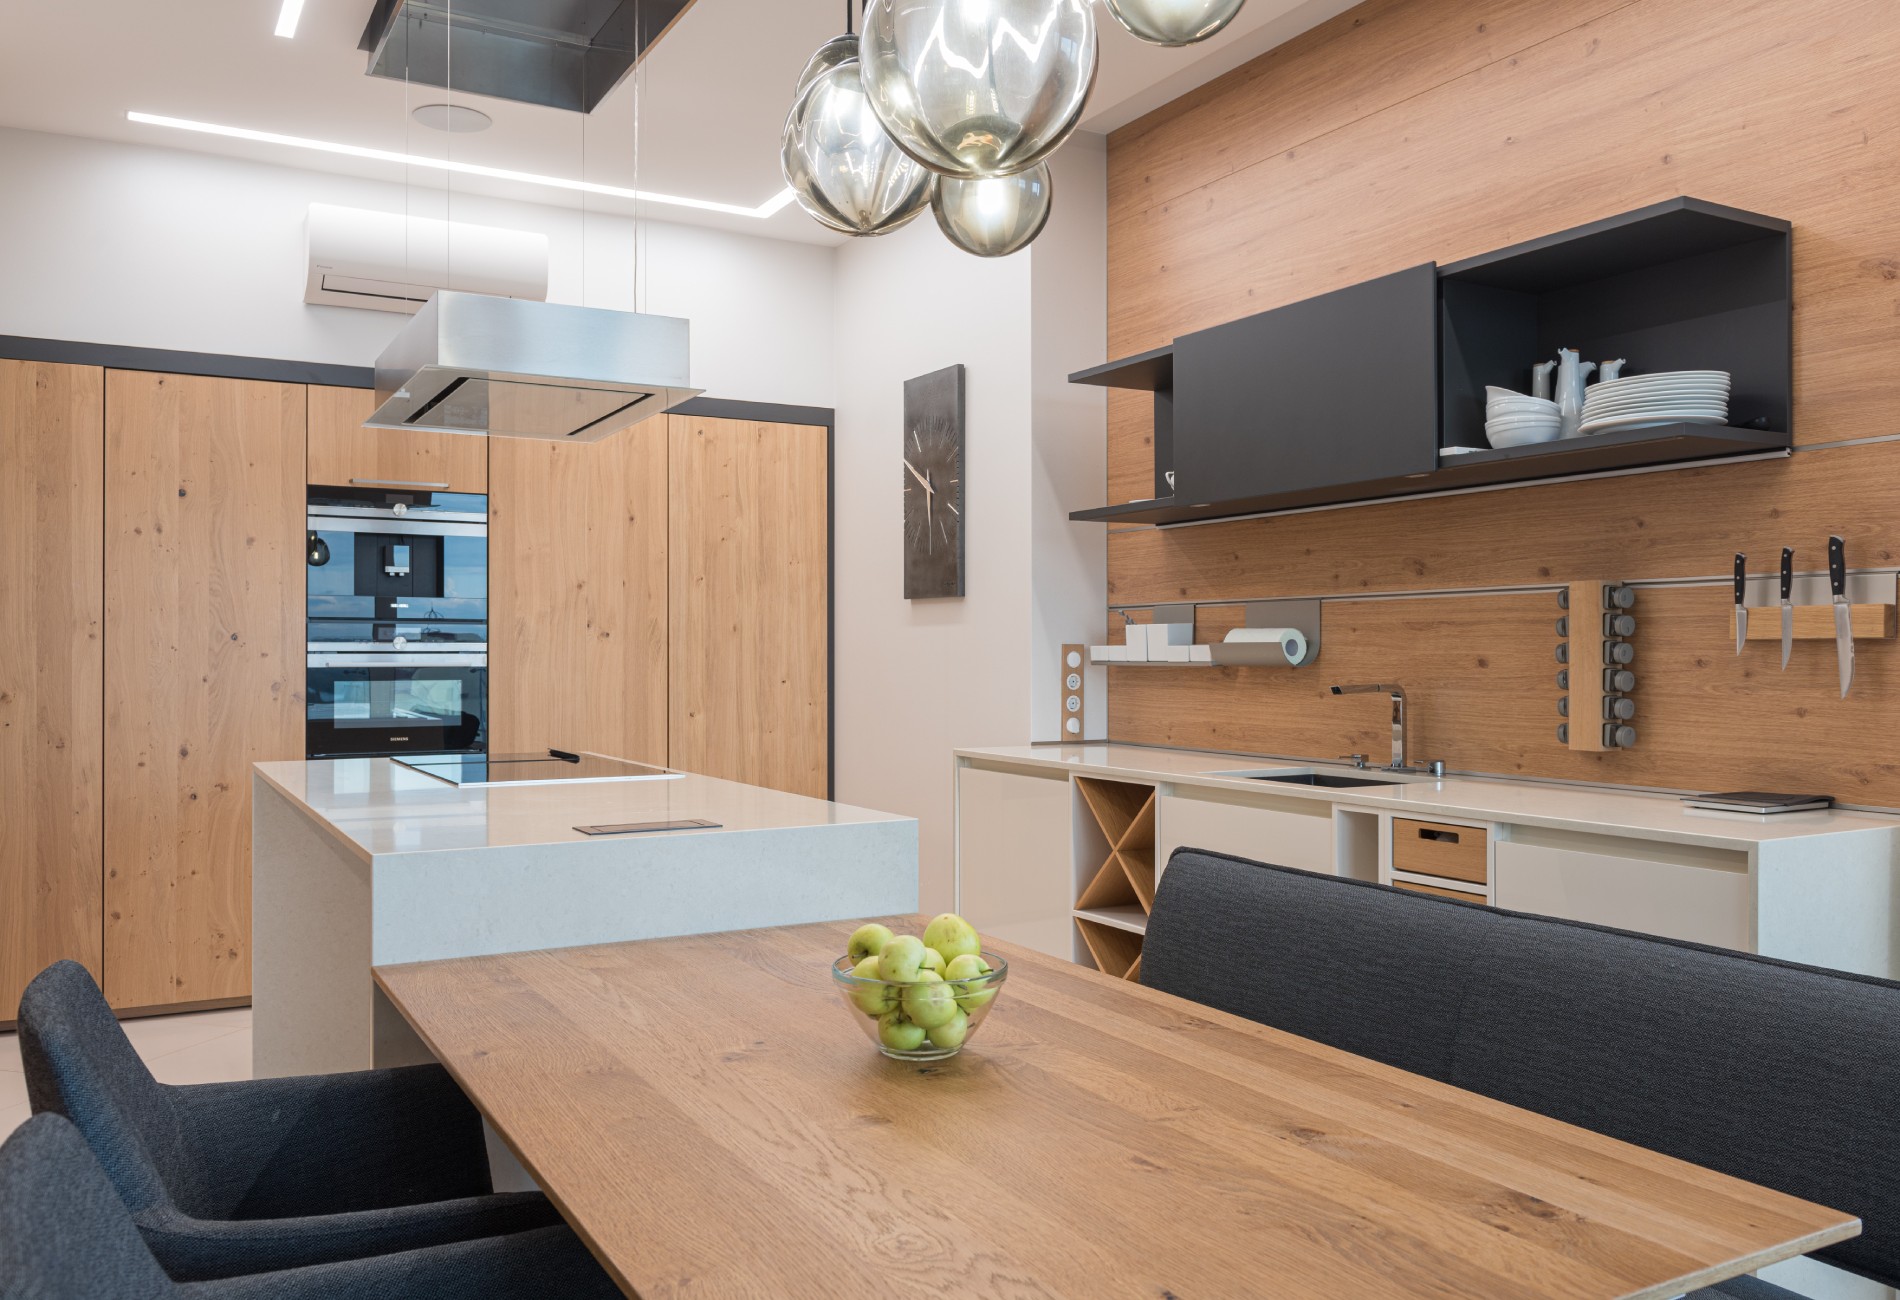  U Shaped Kitchen Cabinet designs for Home